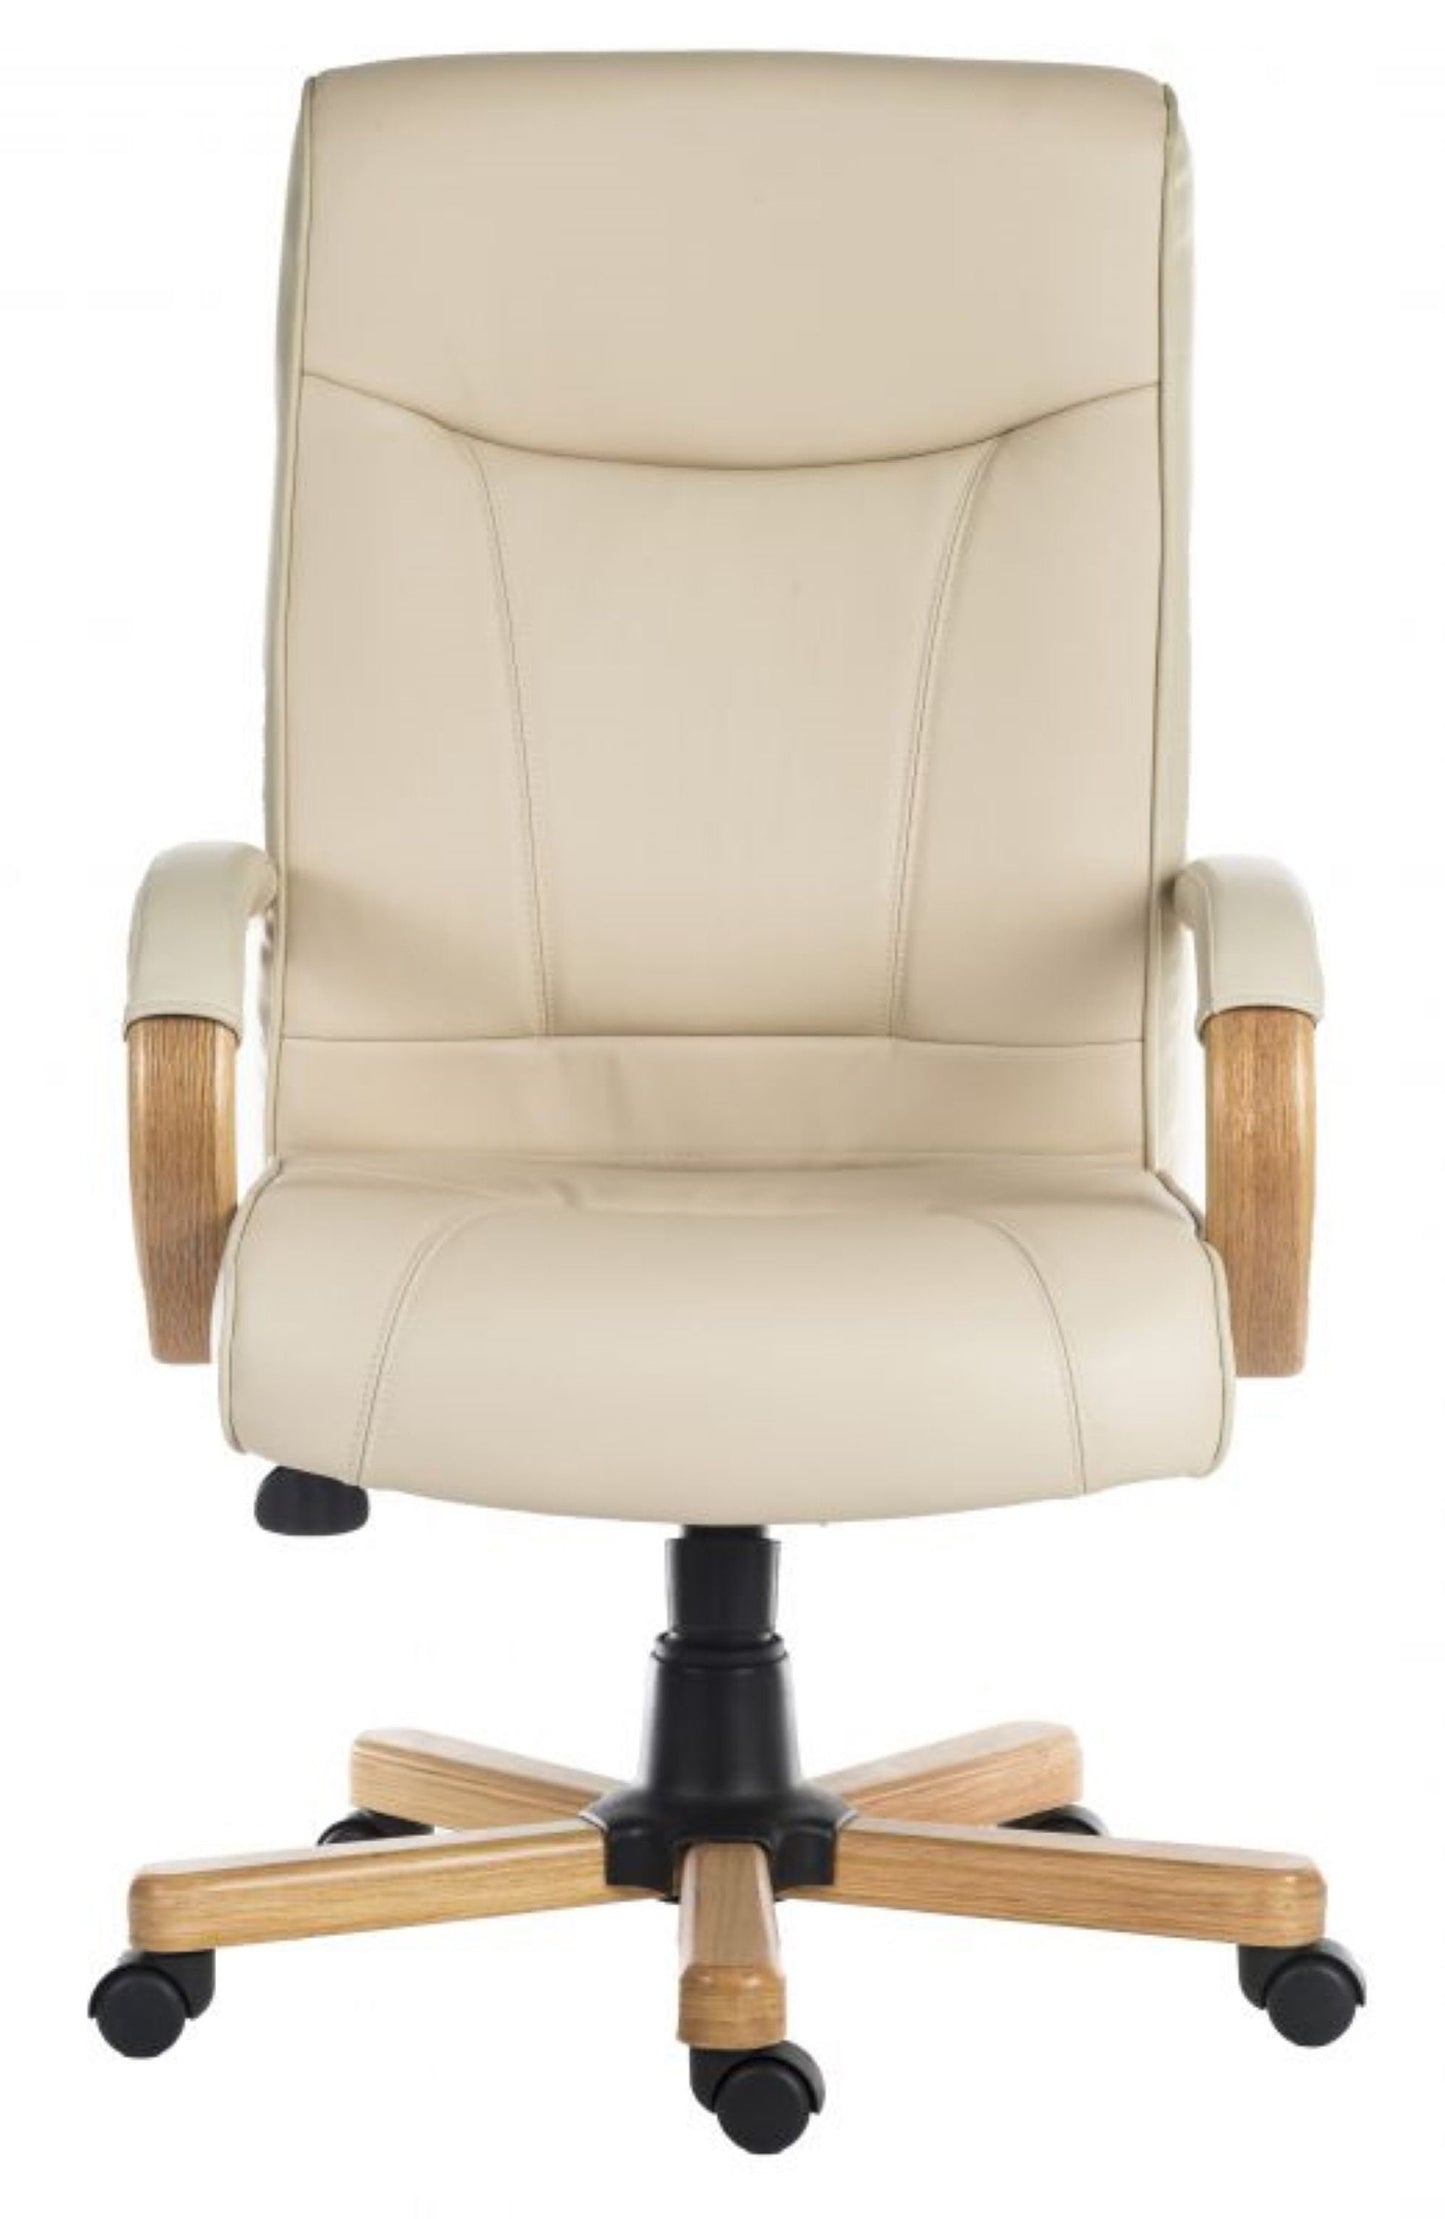 Luxury cream bonded leather faced executive armchair